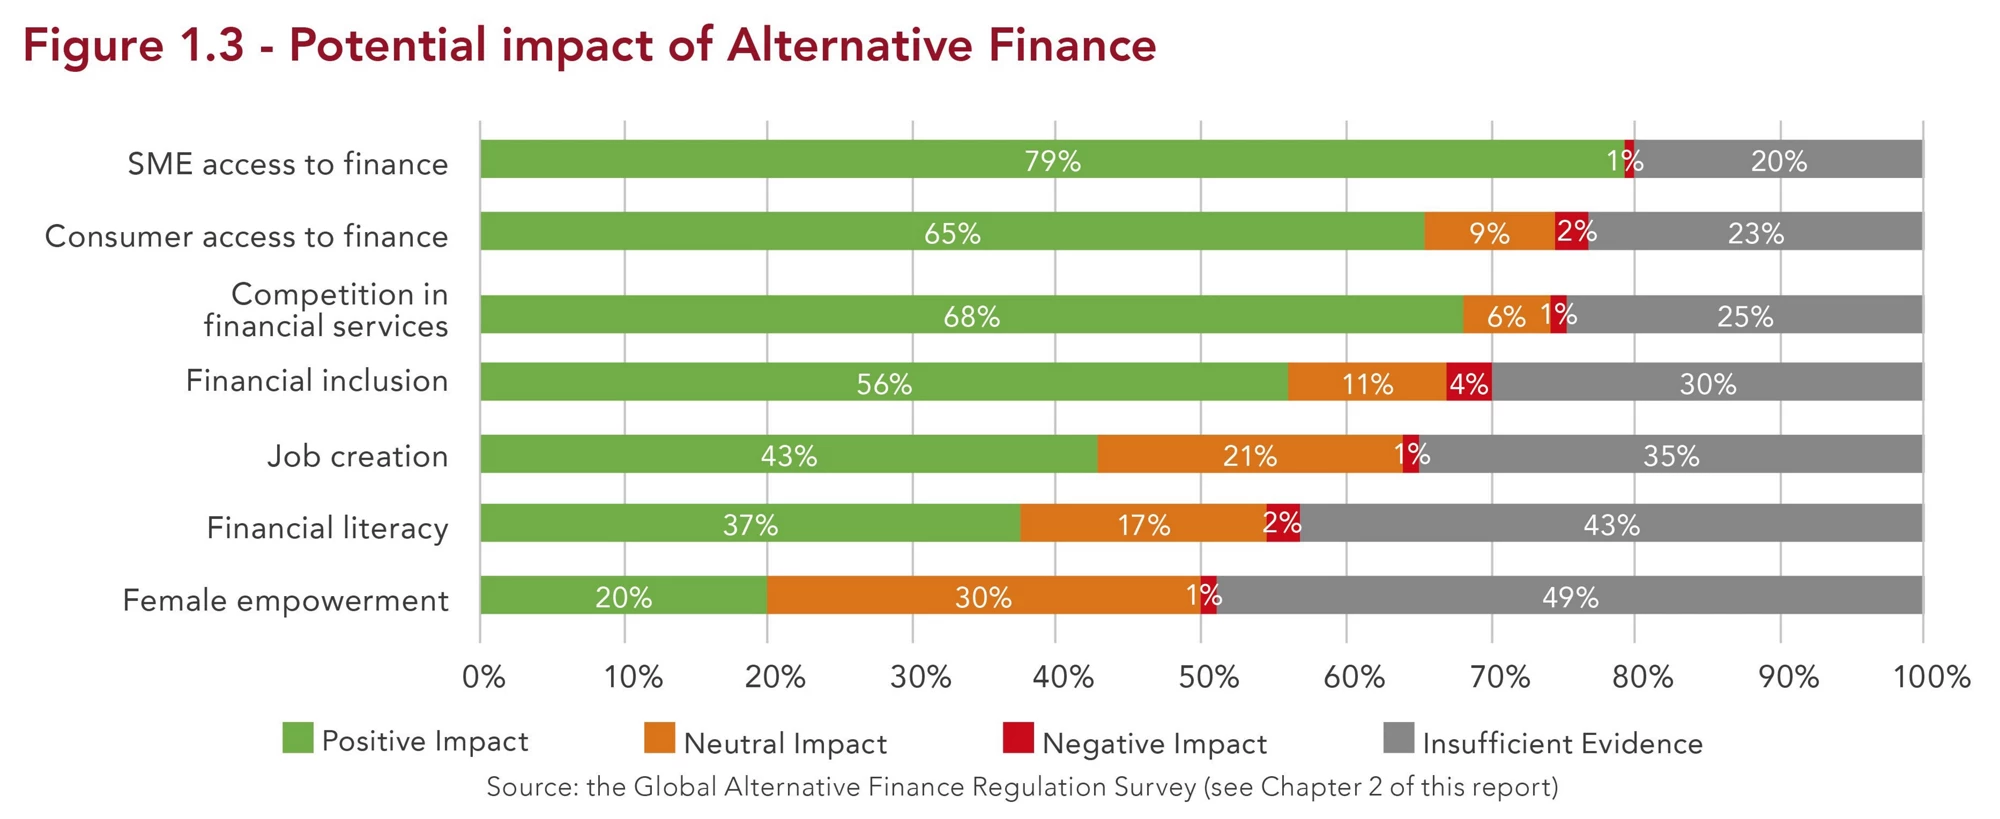 Figure 1.3: Potential impact of alternative finance